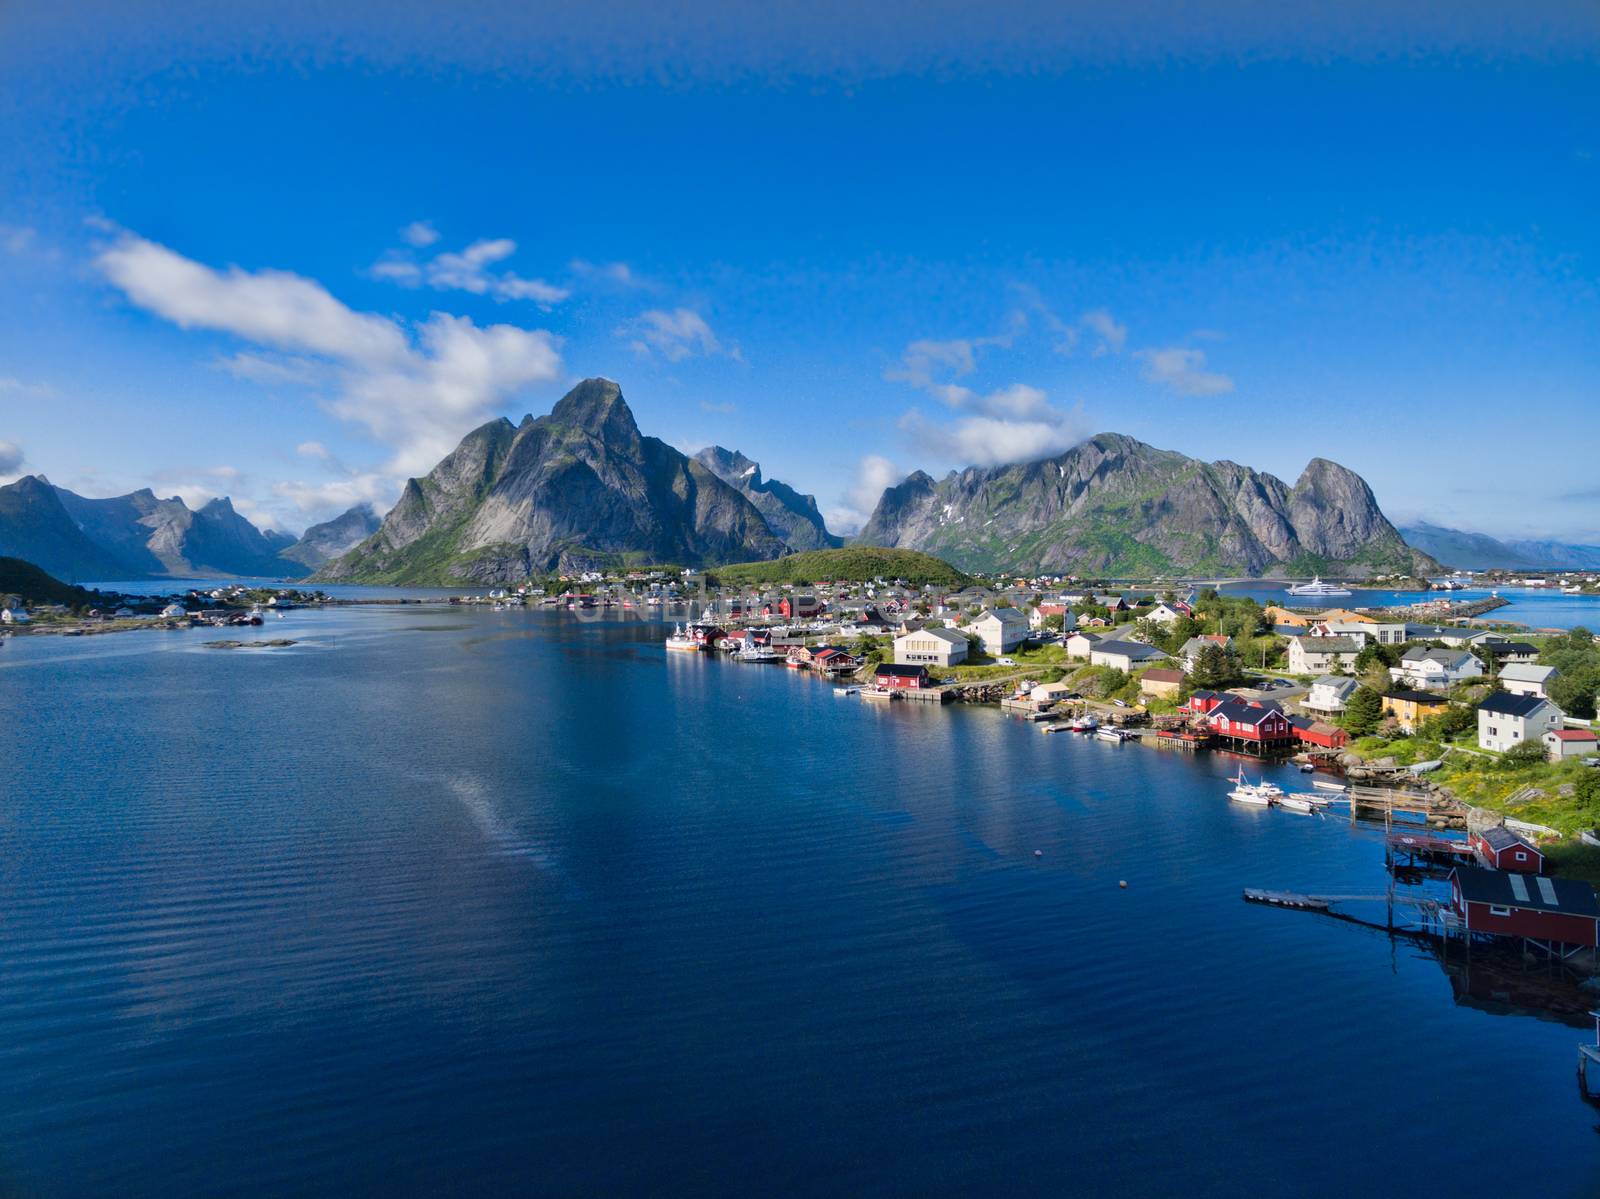 Picturesque view of fishing town Reine on Lofoten islands, Norway